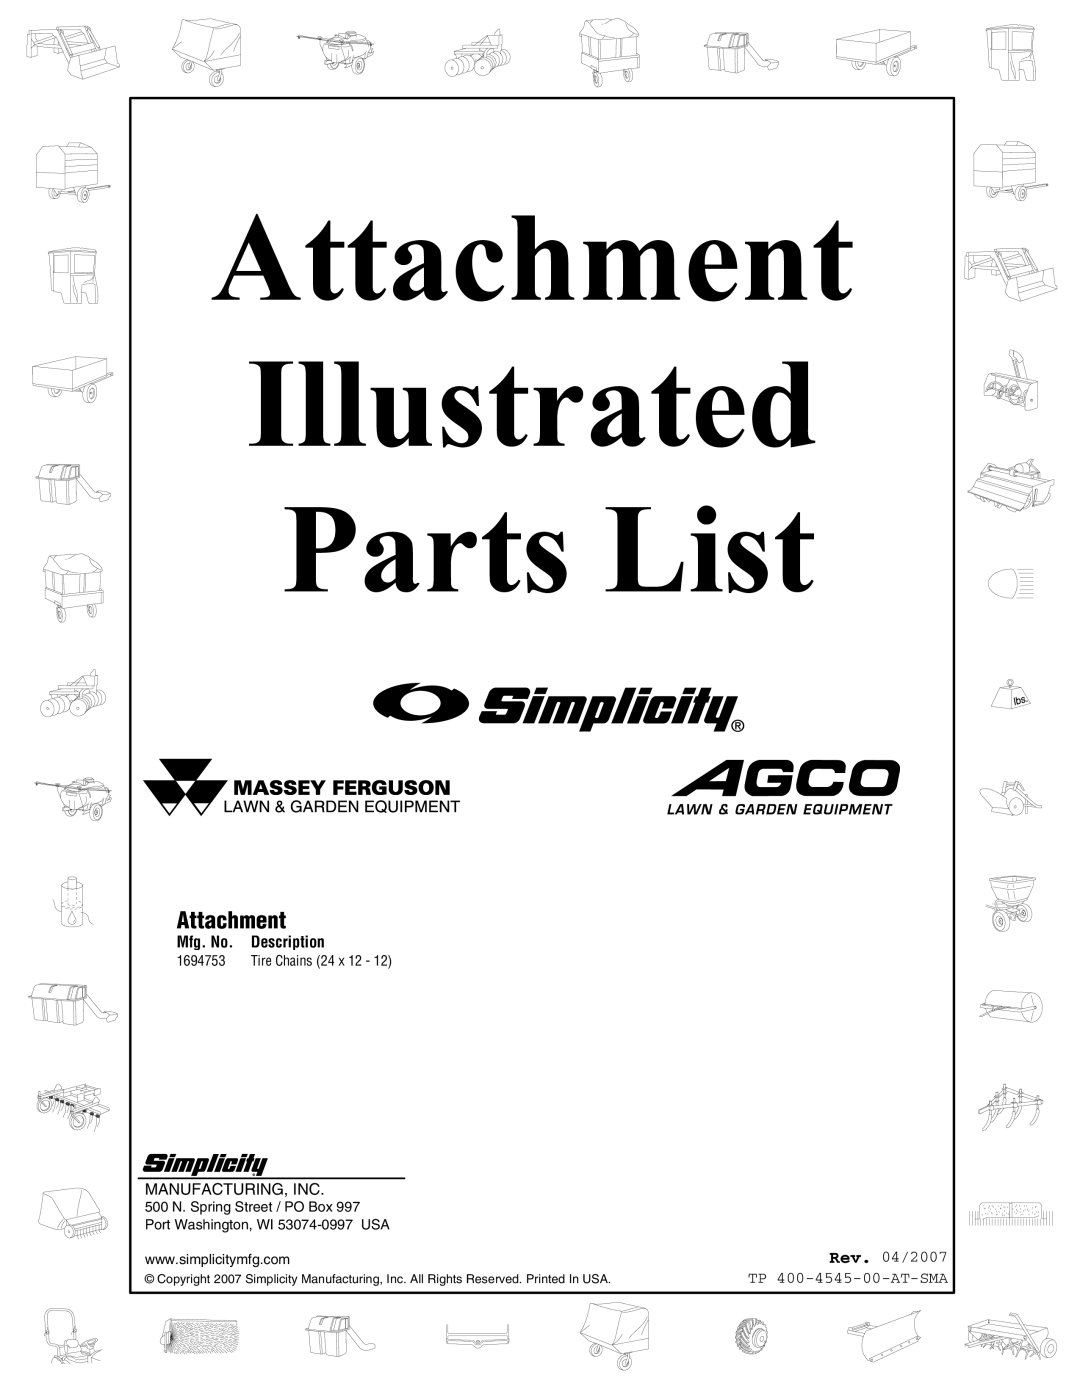 Snapper manual Attachment, Mfg. No. Description, Rev. 04/2007, TP 400-4545-00-AT-SMA, Illustrated, Parts List 